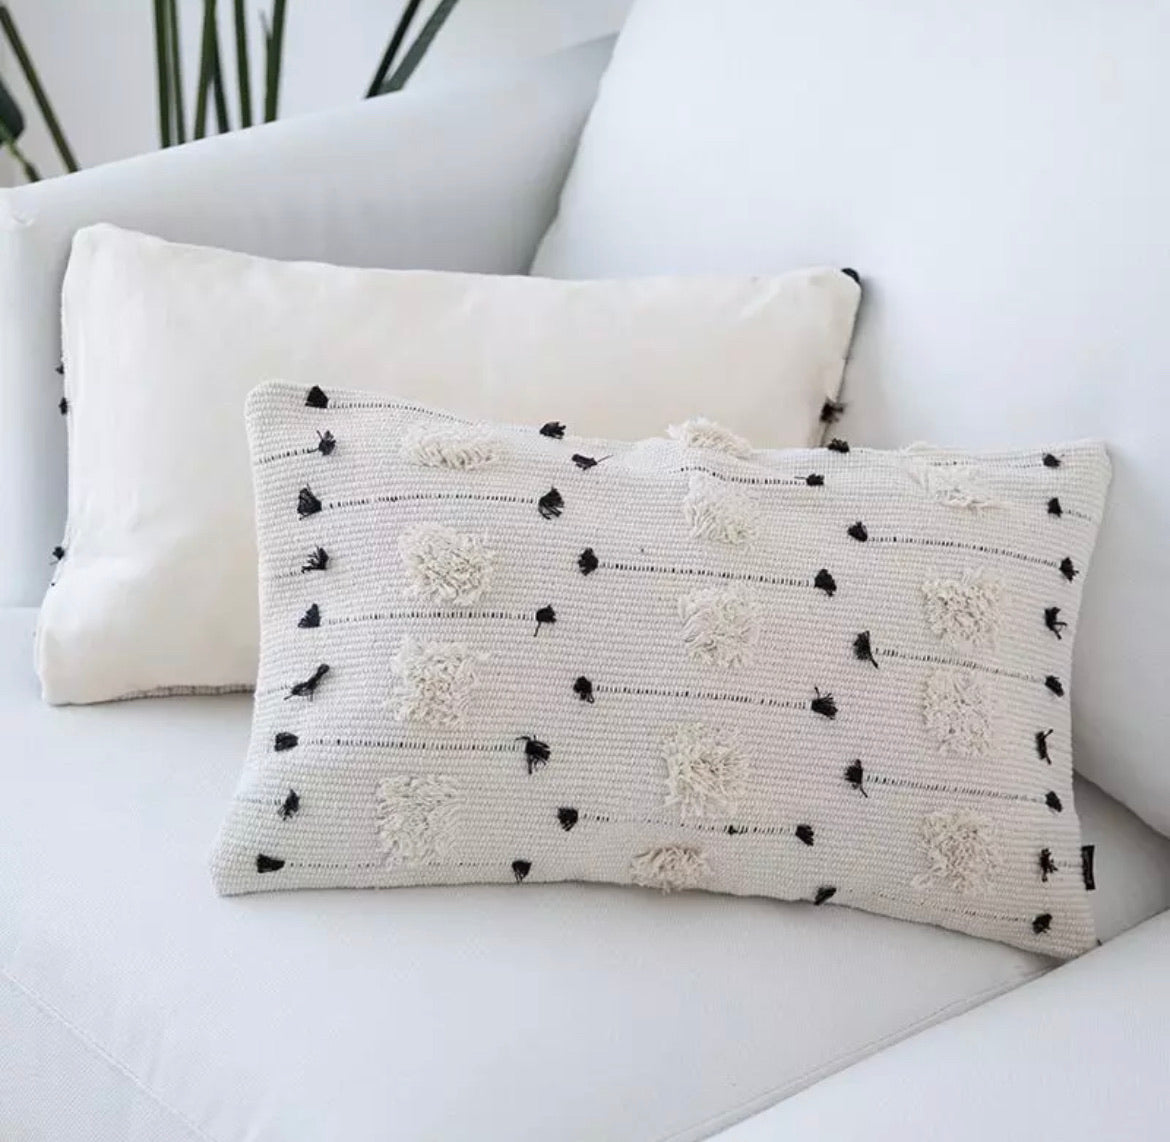 Boho Geometric Black and White Cushion Cover Croft Home Decor